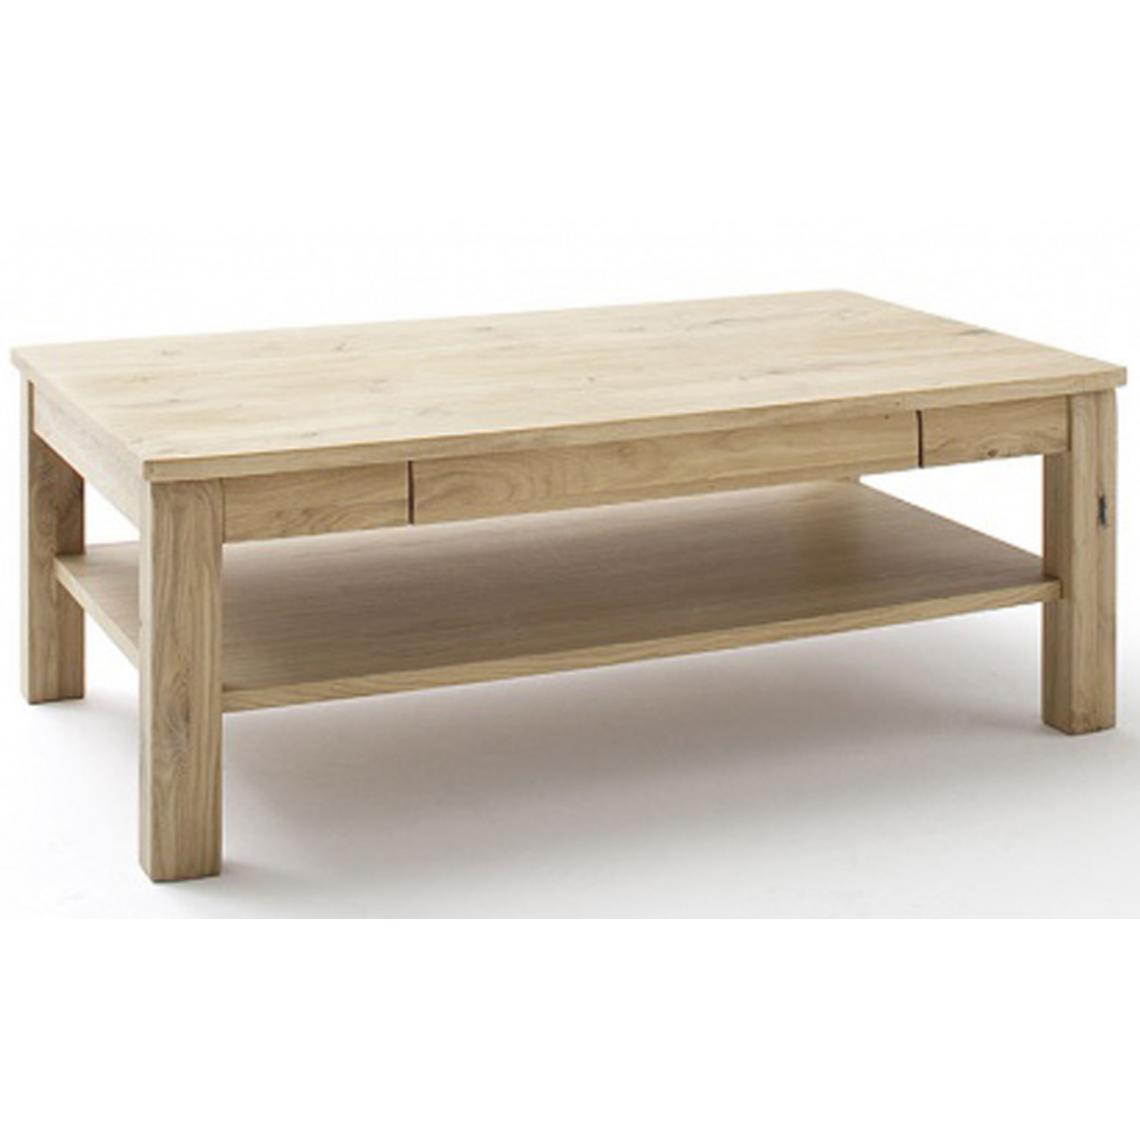 Pegane - Table basse avec rangement en chêne blanchi - L.117 x H.42 x P.65 cm - Tables basses